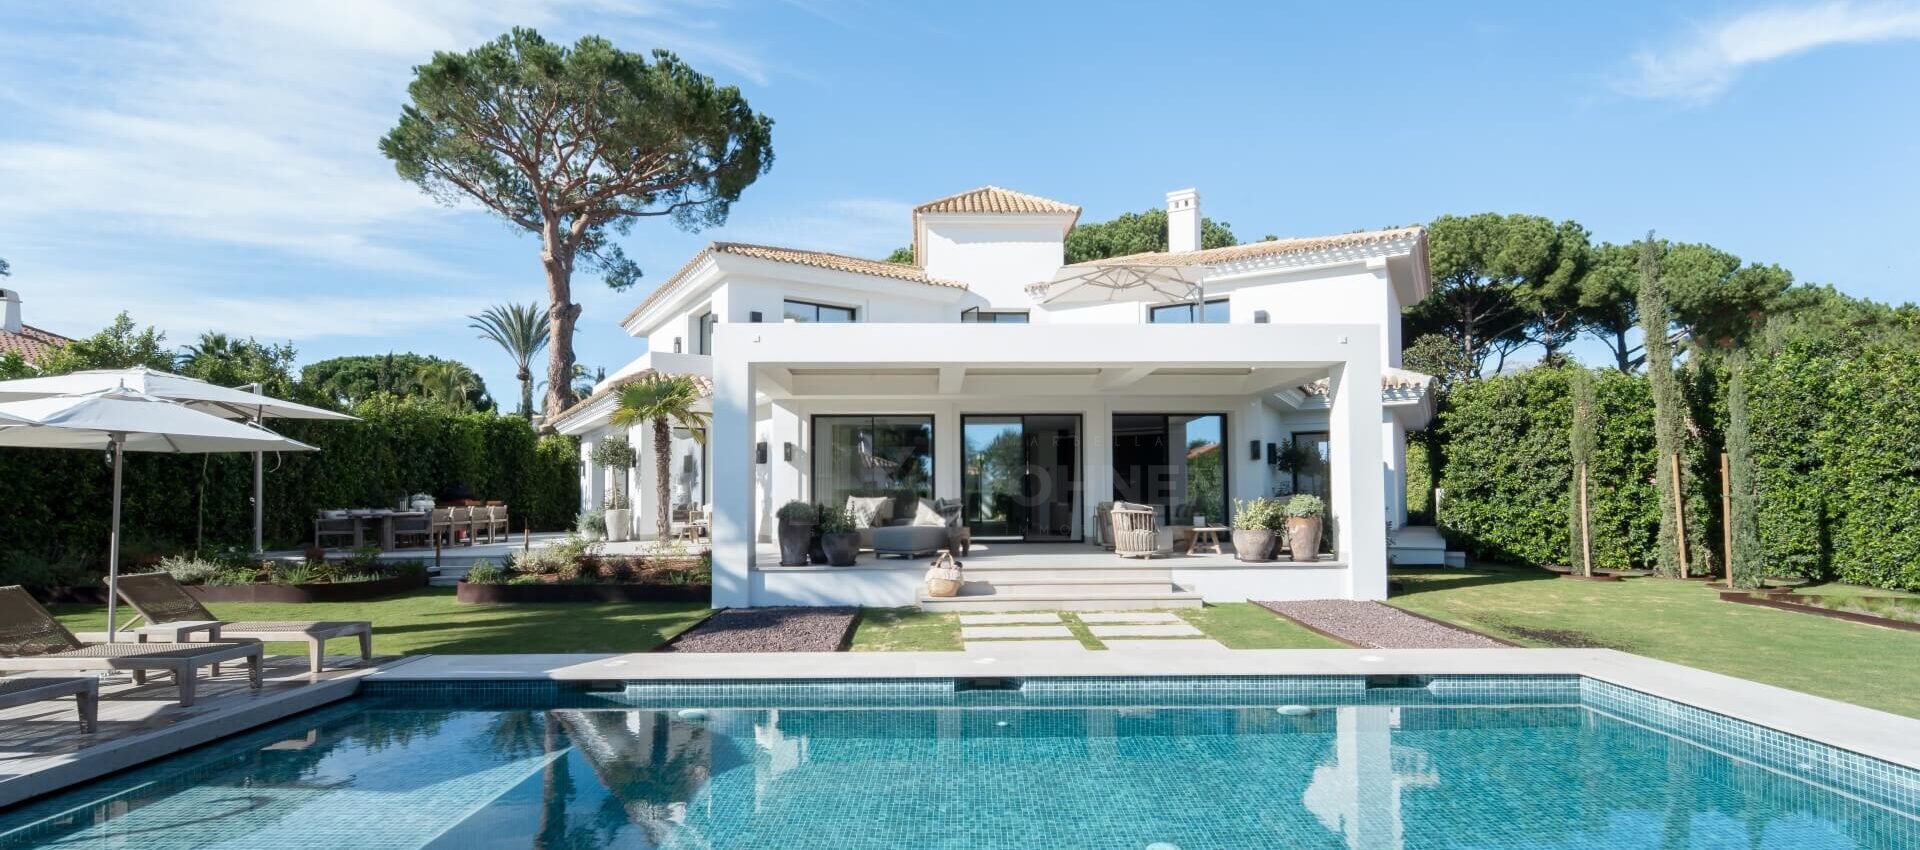 Andalusian style villa located in Reserva de Los Monteros